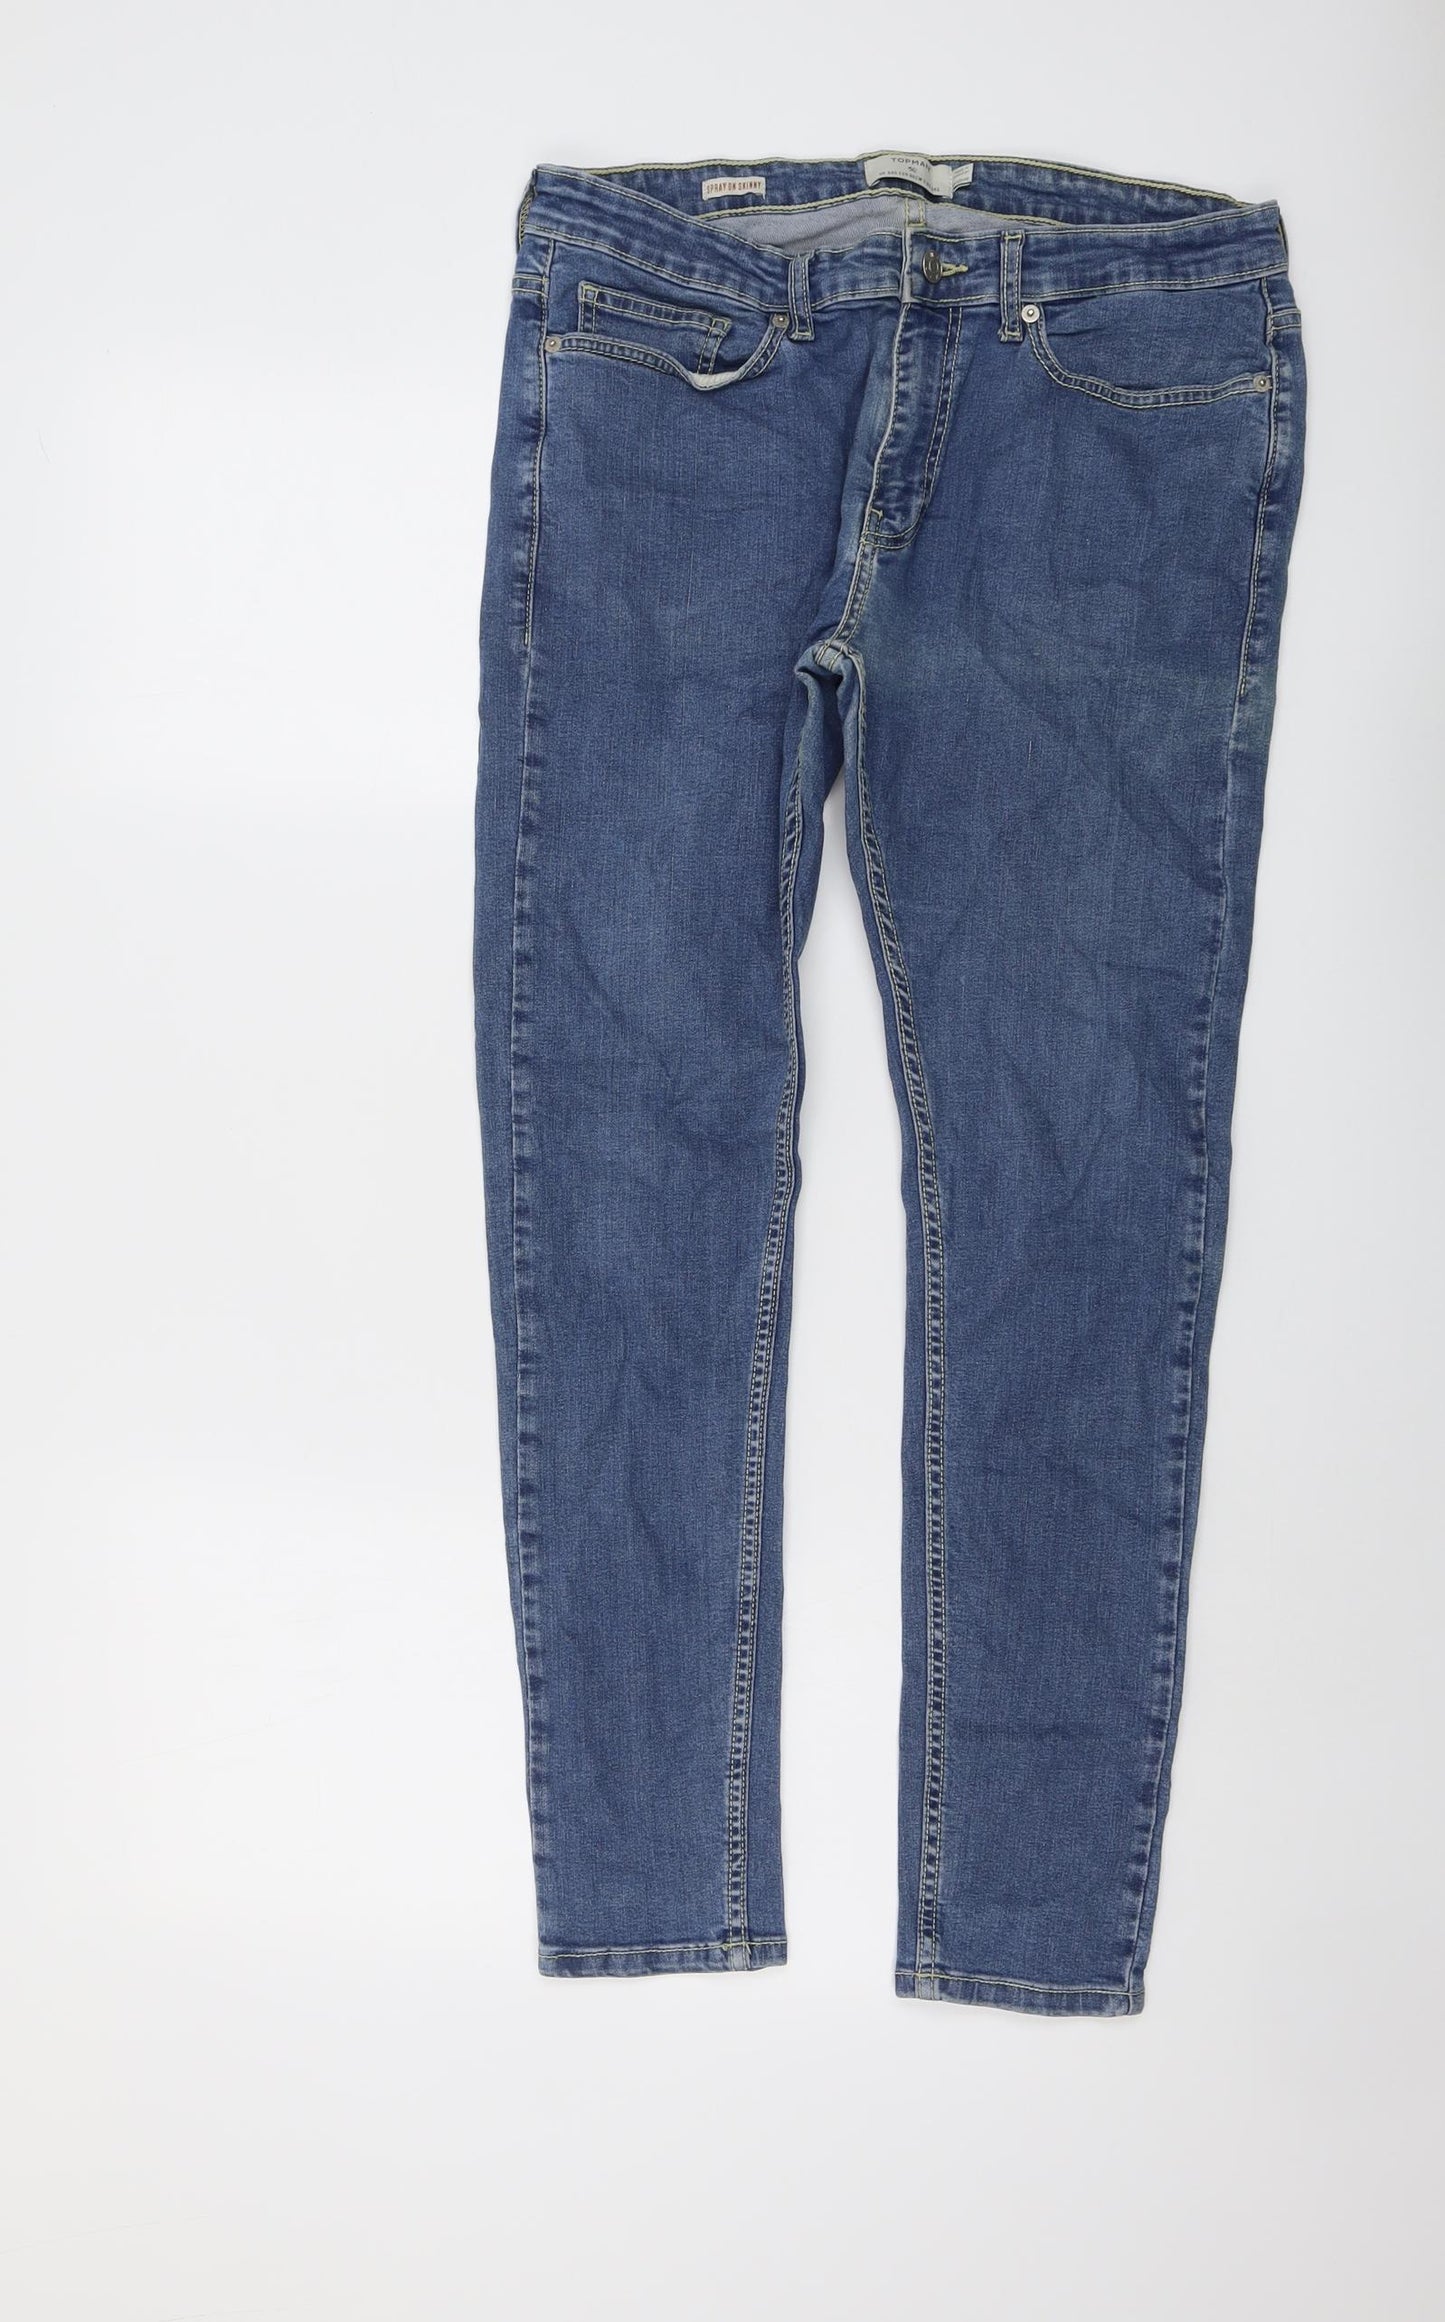 Topman Mens Blue Cotton Skinny Jeans Size 34 in L28 in Regular Button